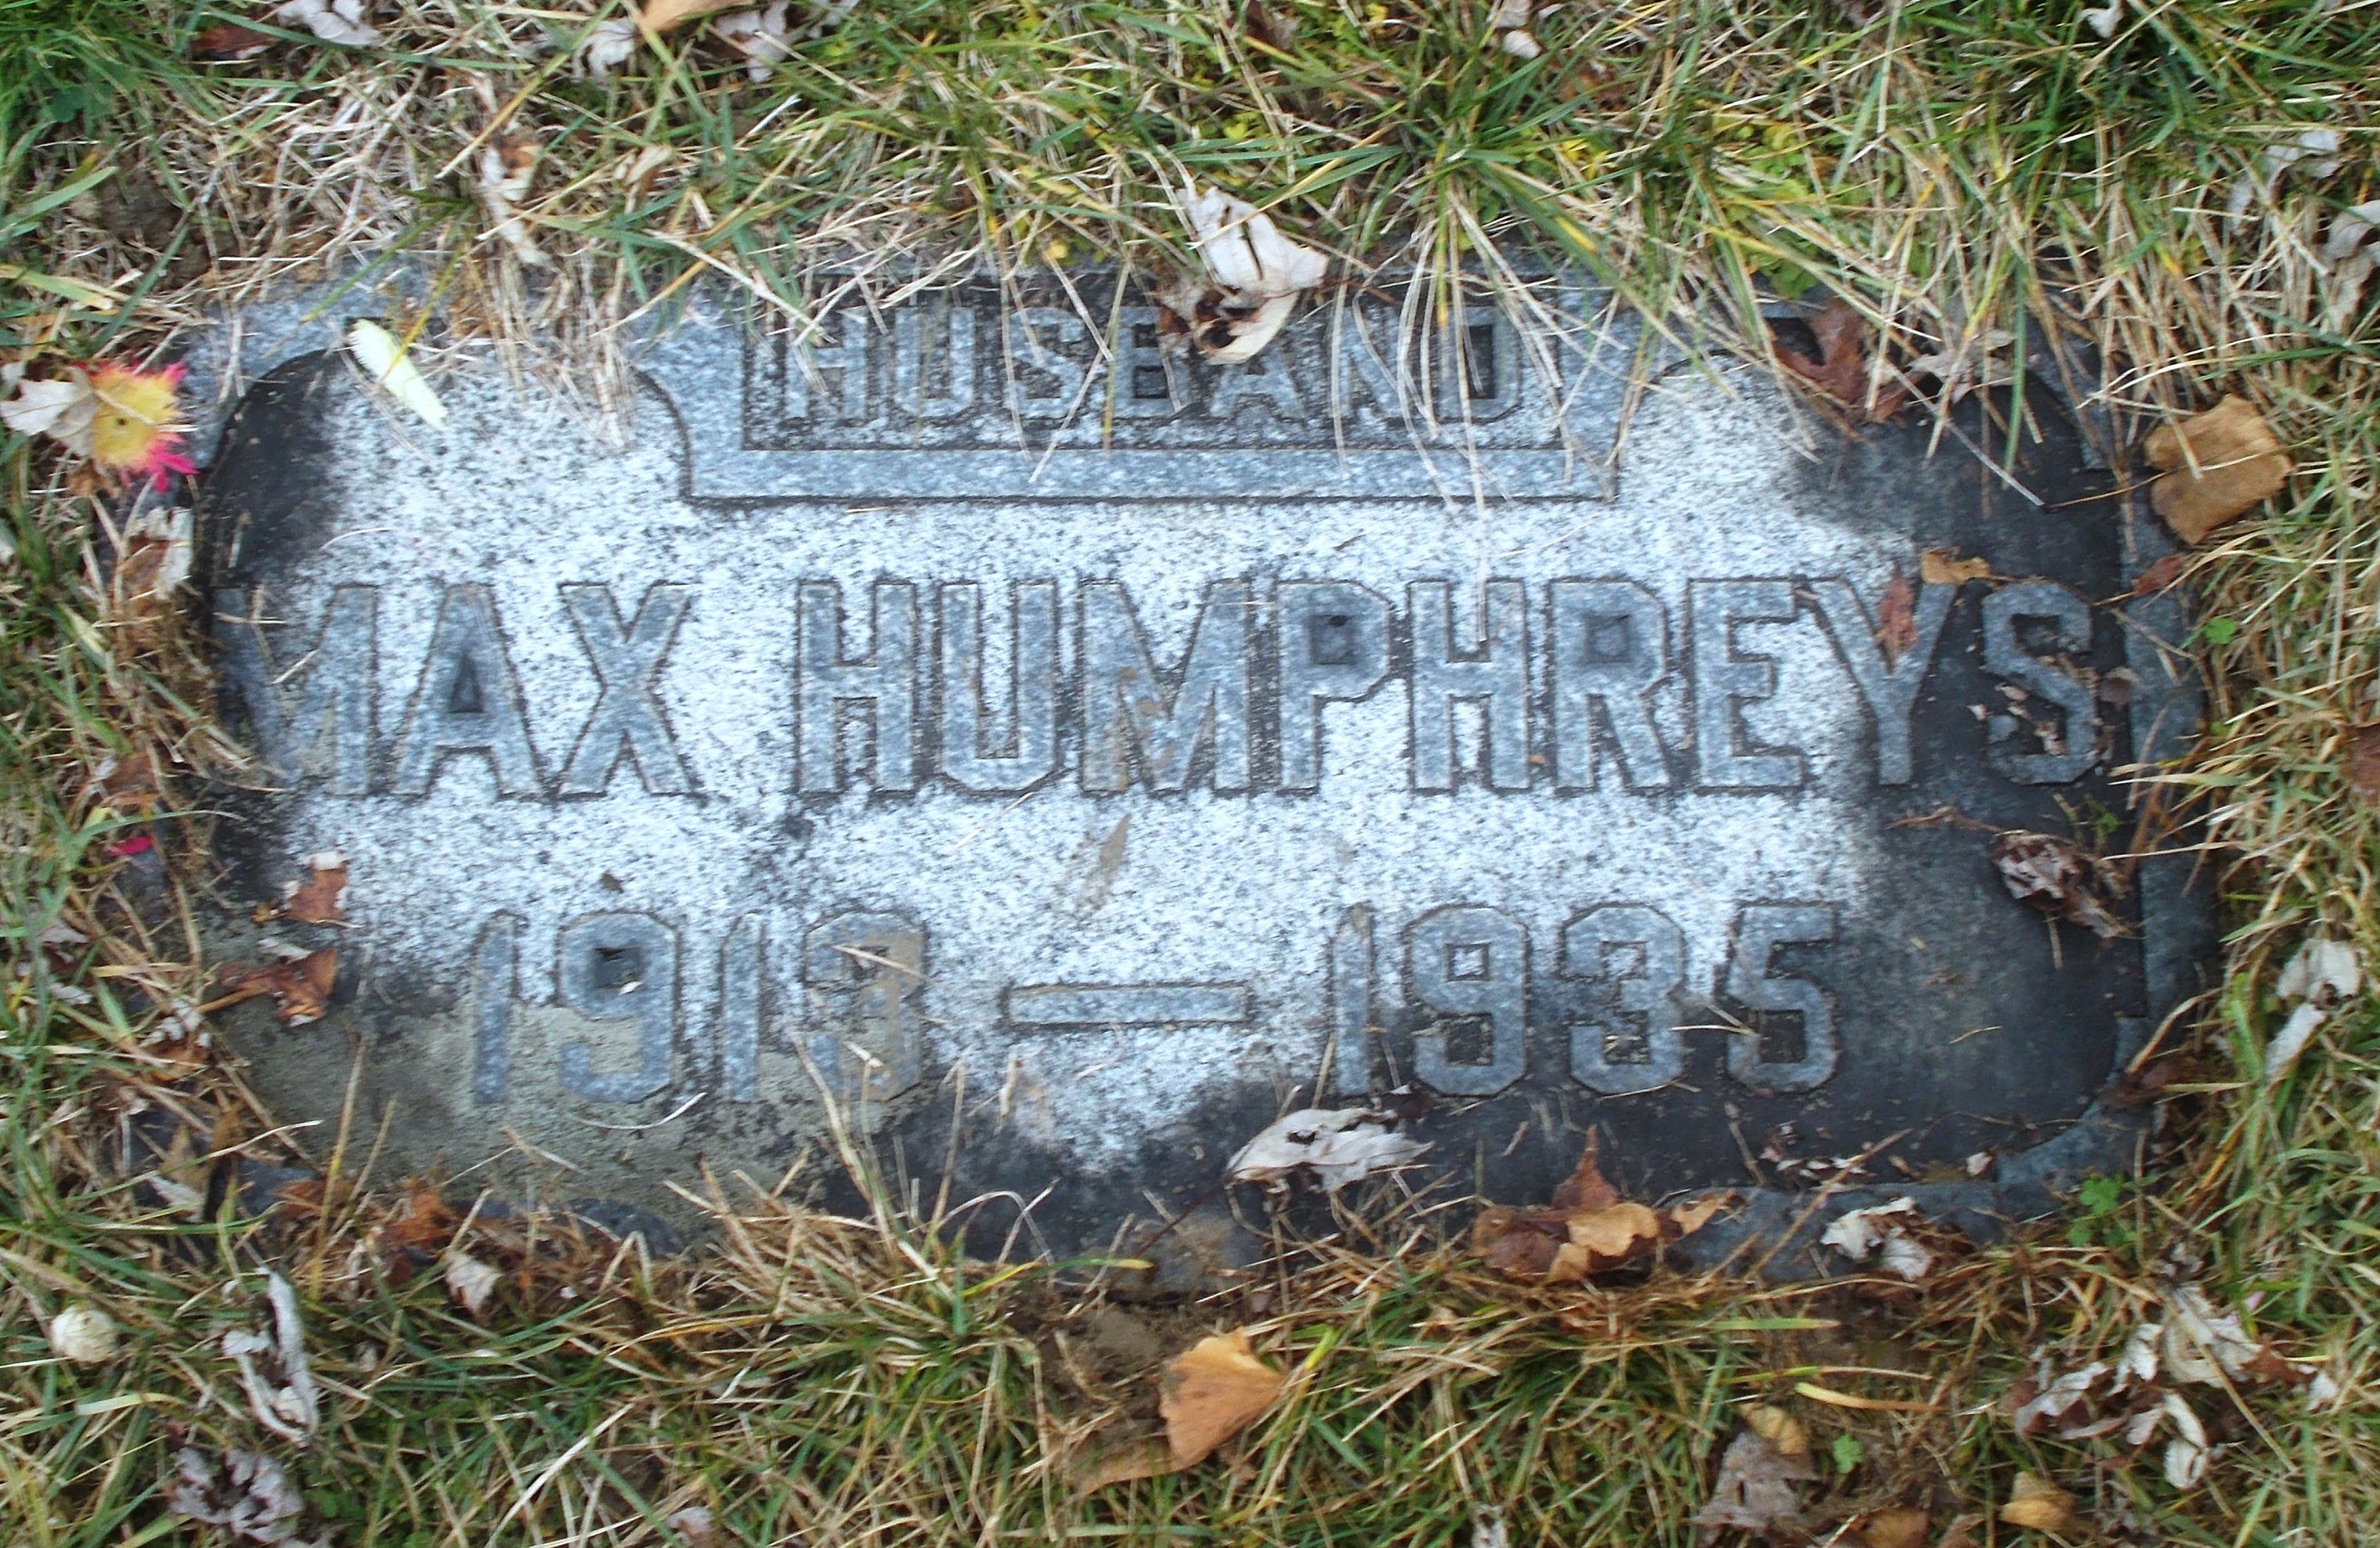 Max Humphreys